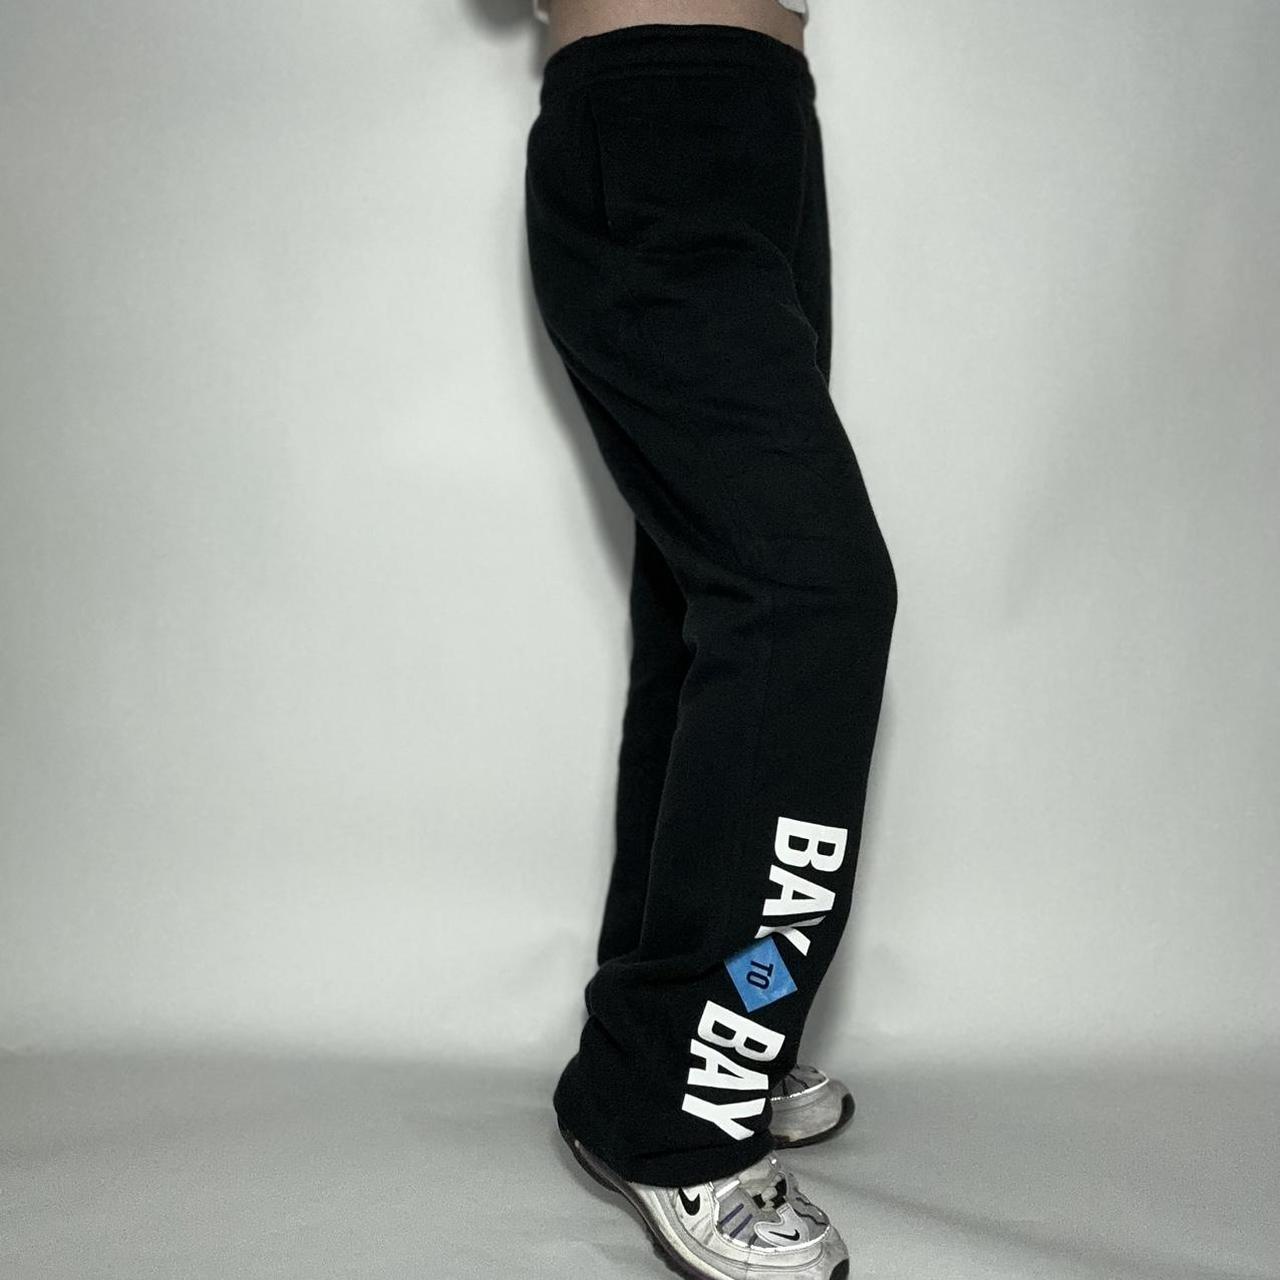 Vintage 90s Nike black baggy Bay to Bay track pants